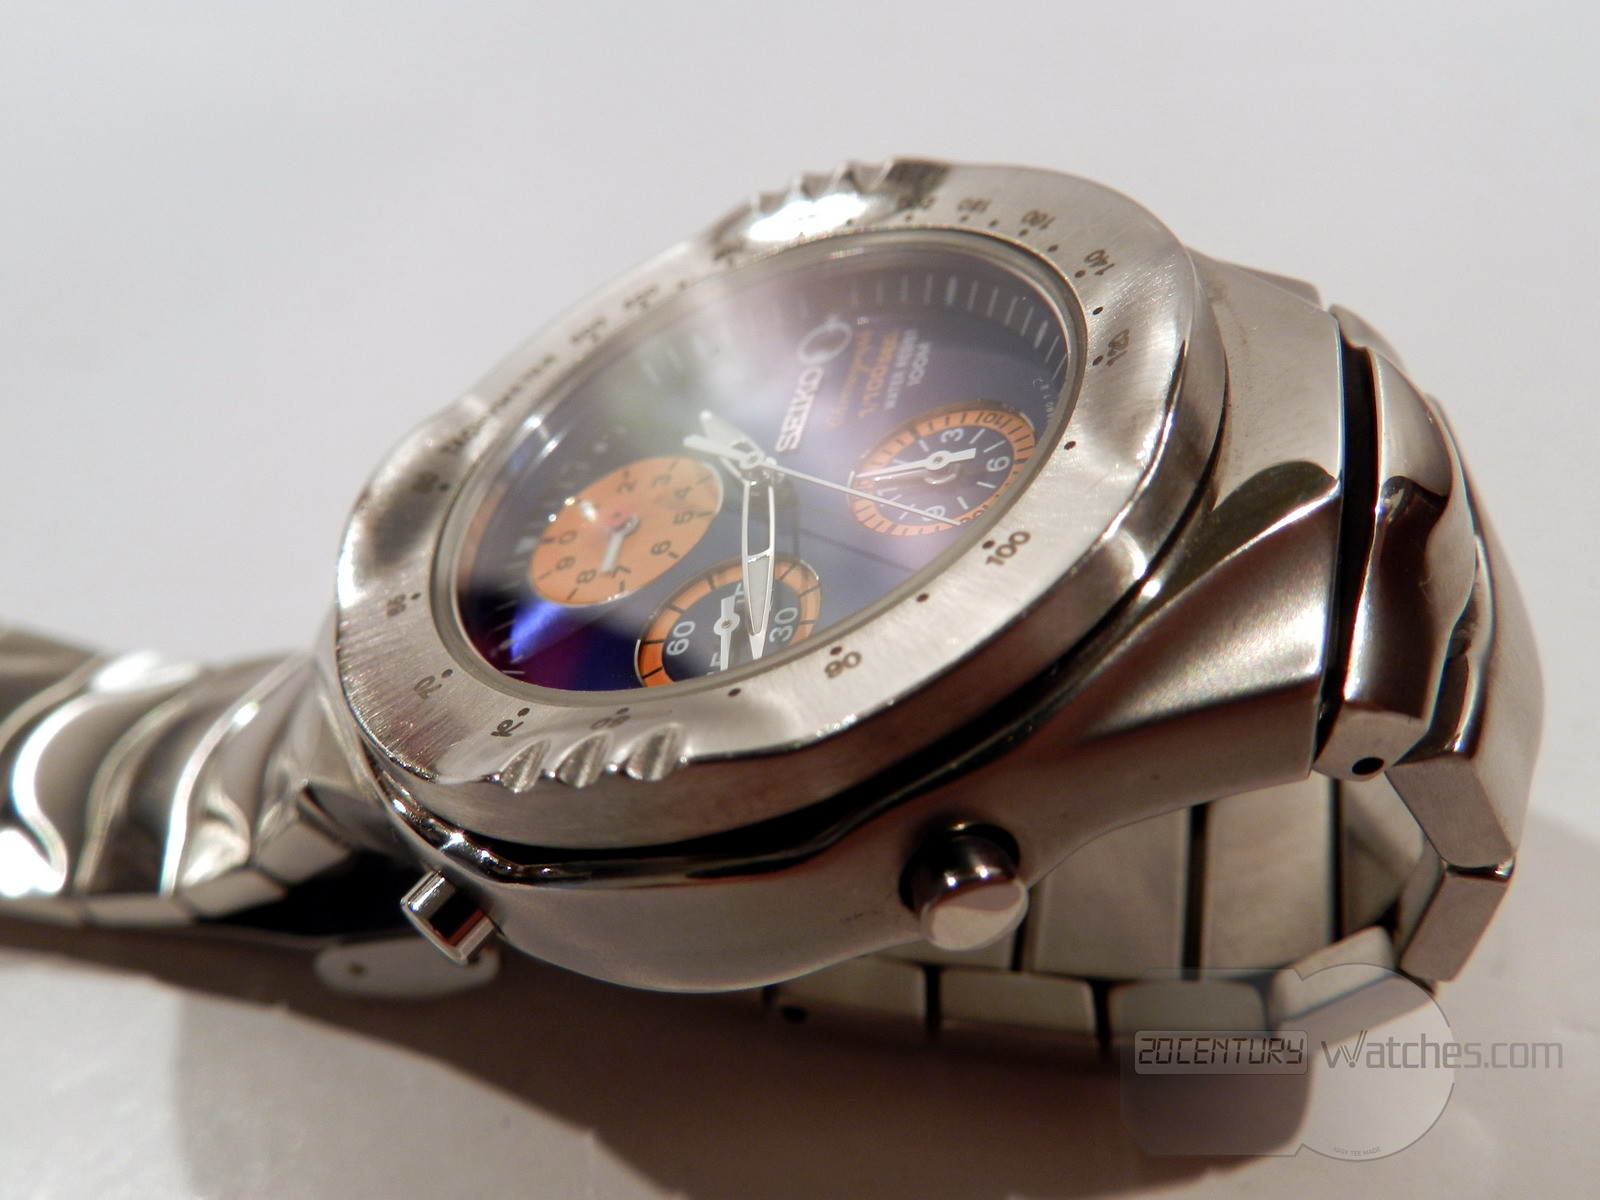 Seiko Macchina Sportiva by Giugiaro – 20th Century Watches